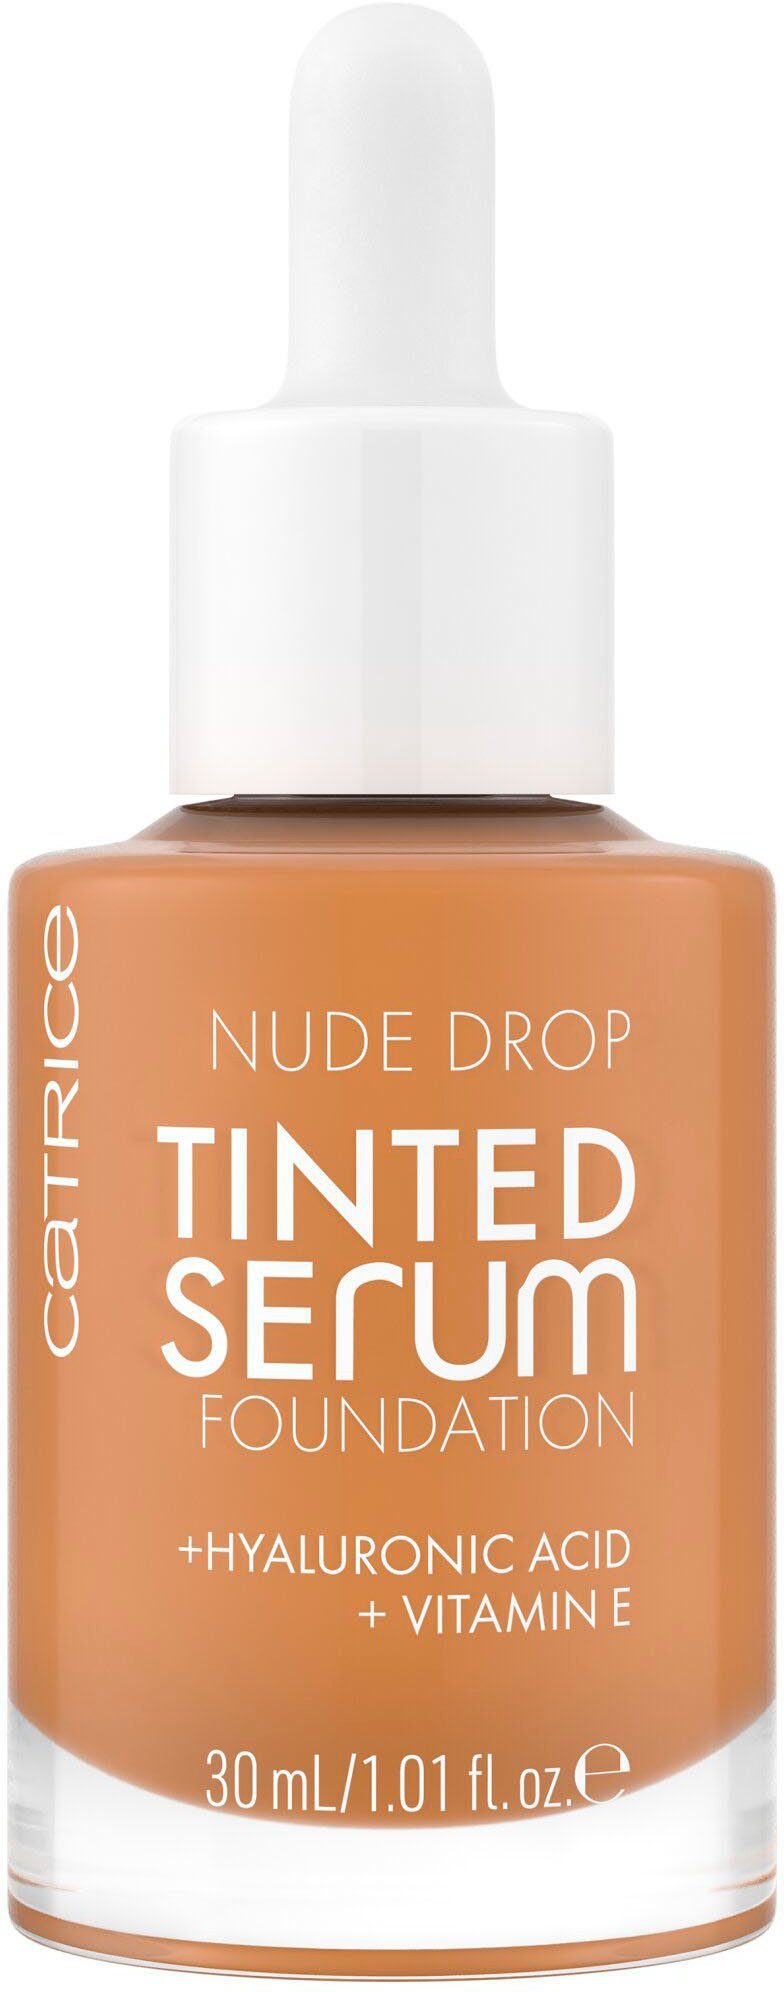 075C Drop Nude nude Catrice Foundation Tinted Foundation Serum